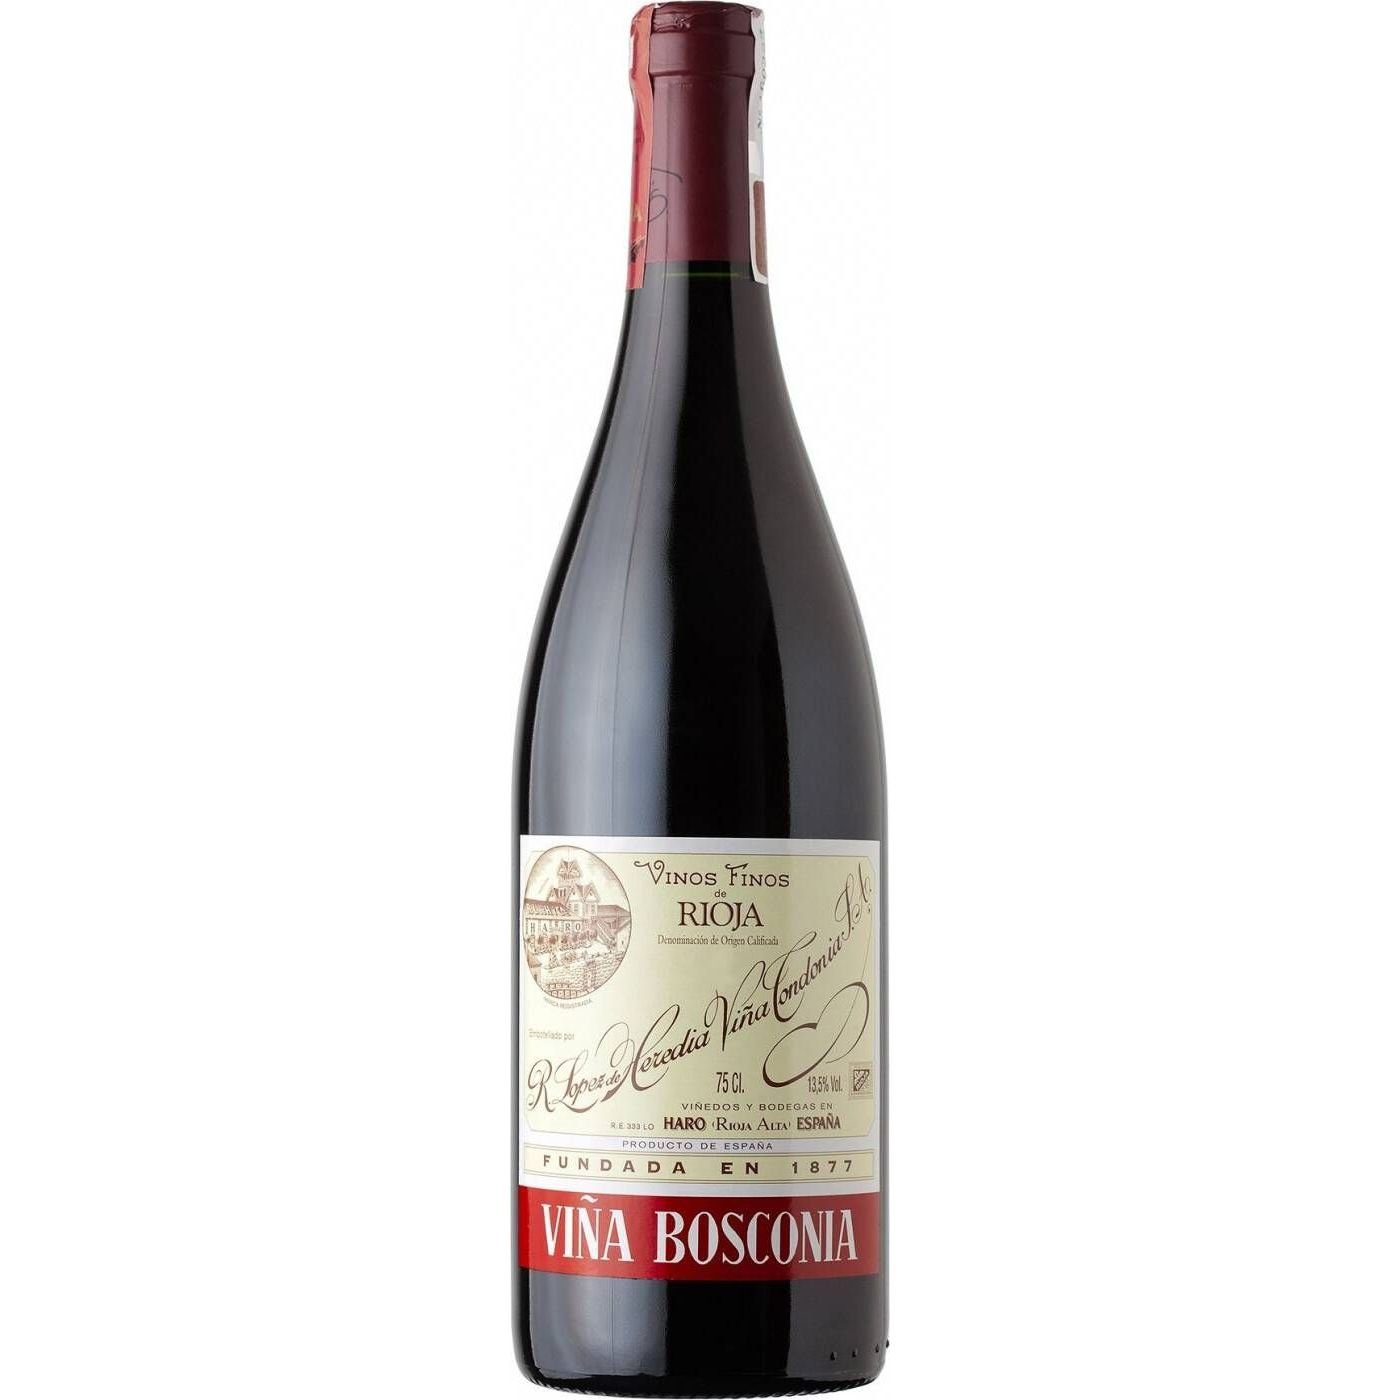 Вино Vina Bosconia Rioja Reserva 2011, красное, сухое, 0,75 л - фото 1